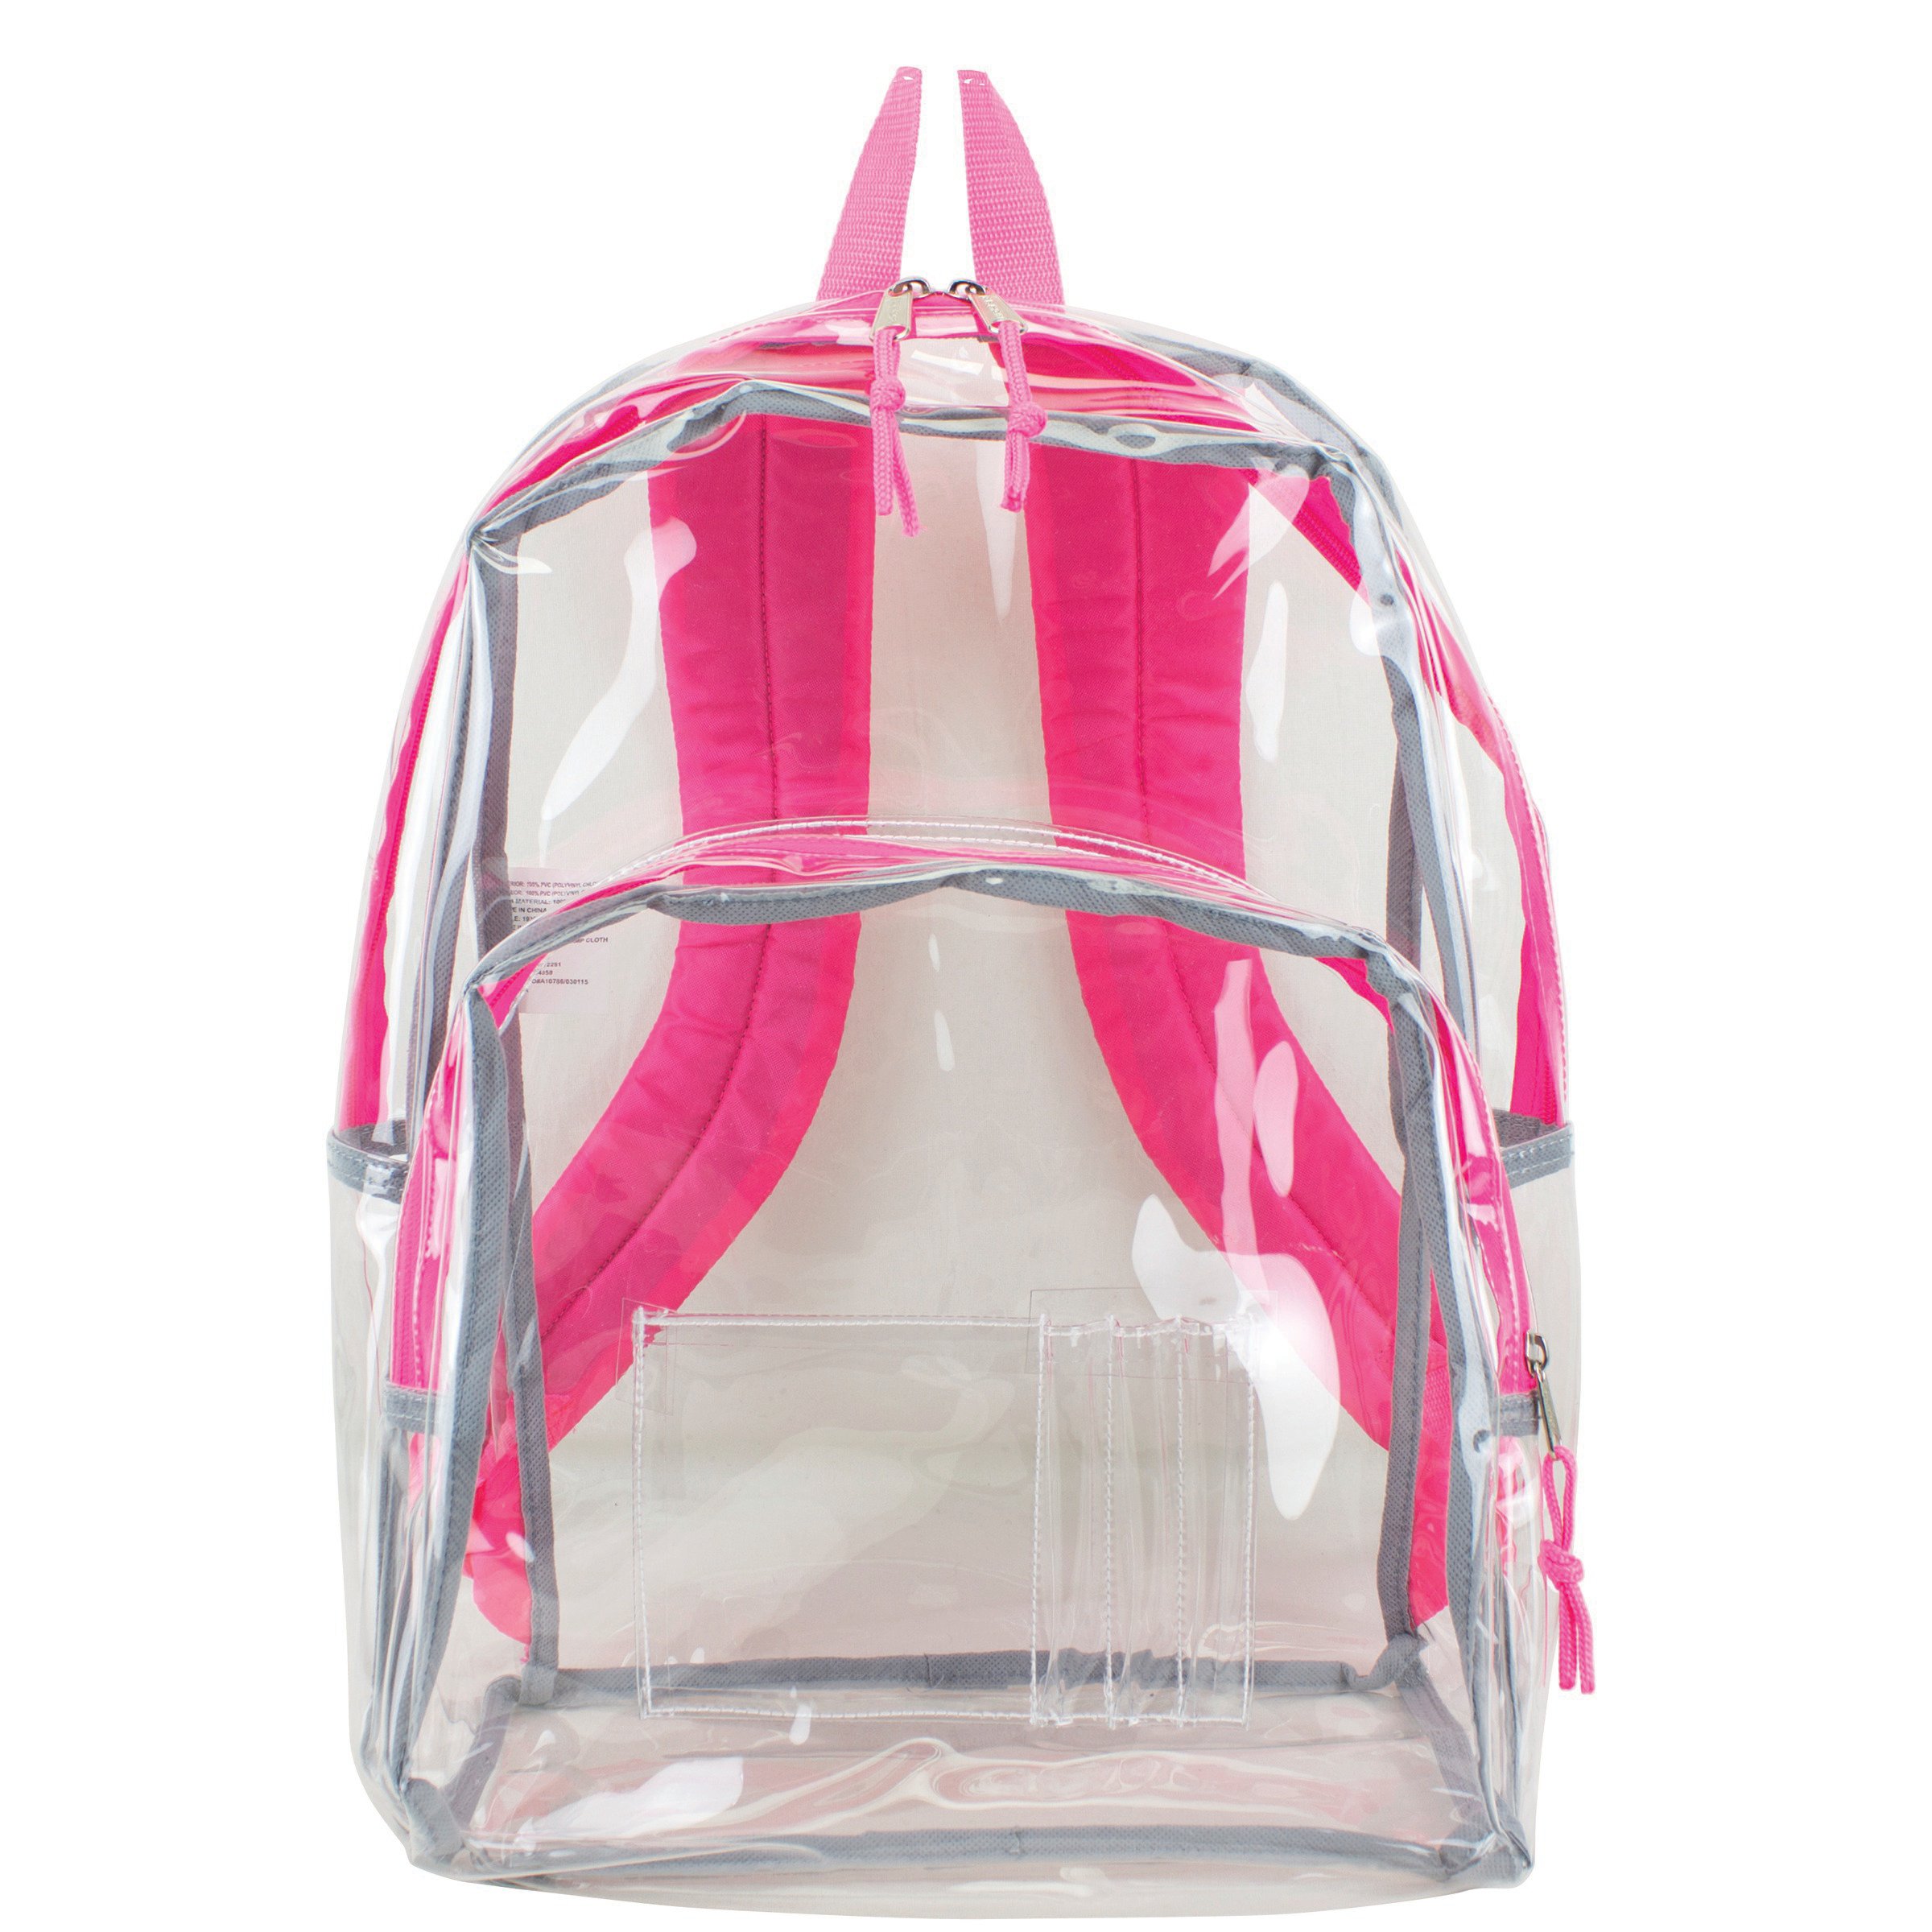 Eastsport Clear Backpack with Adjustable Straps - Shop Backpacks at H-E-B